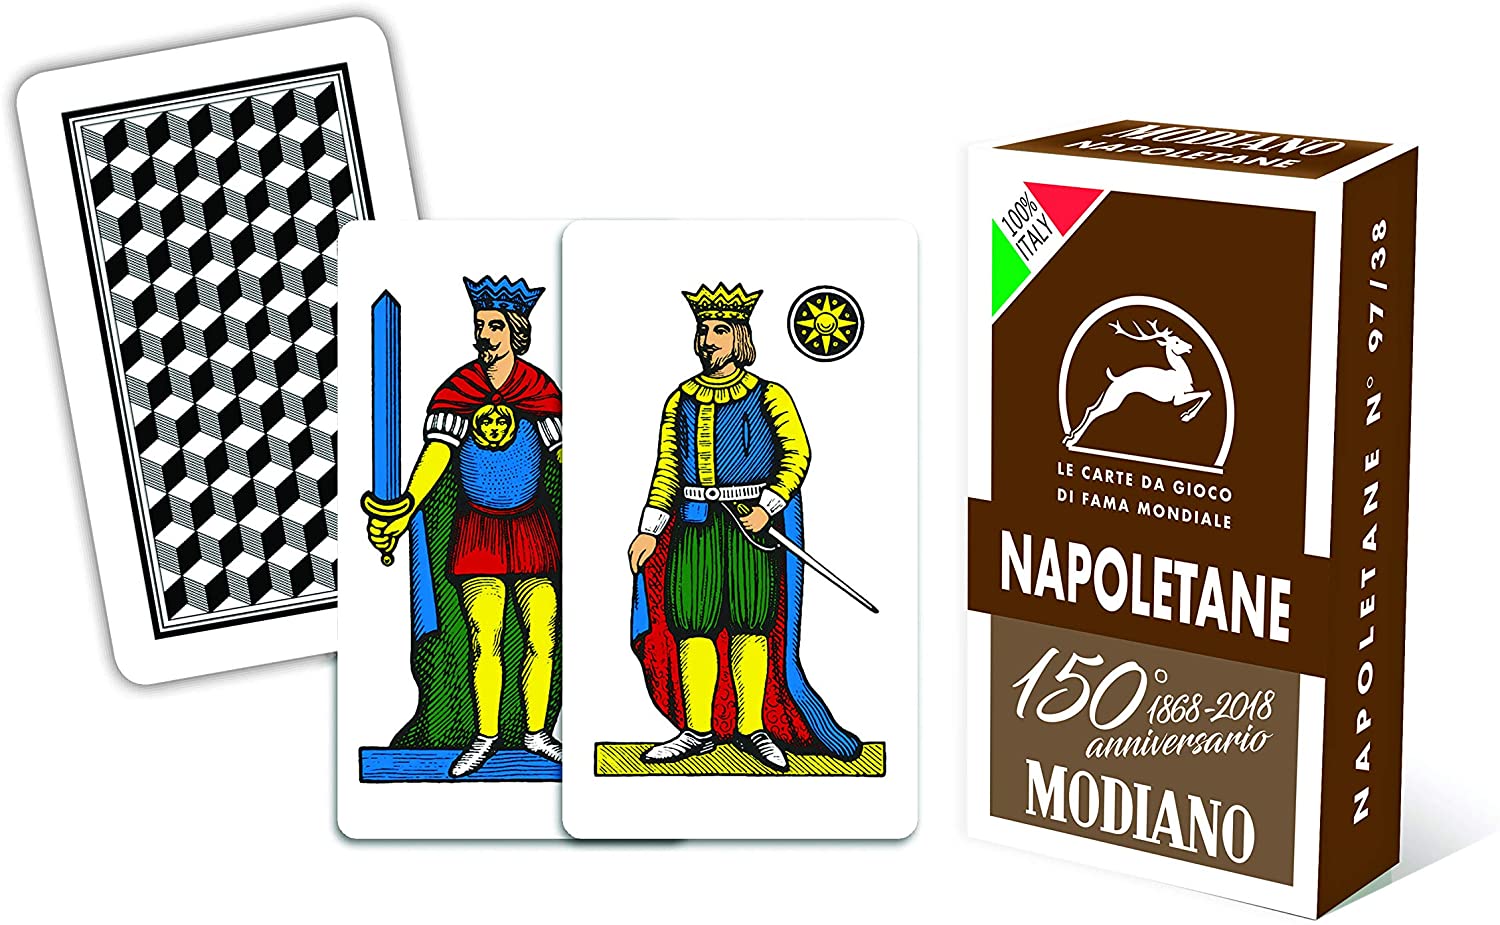 Modiano jeu cartes Napoletane 150 ° Anniversario-Rouge 